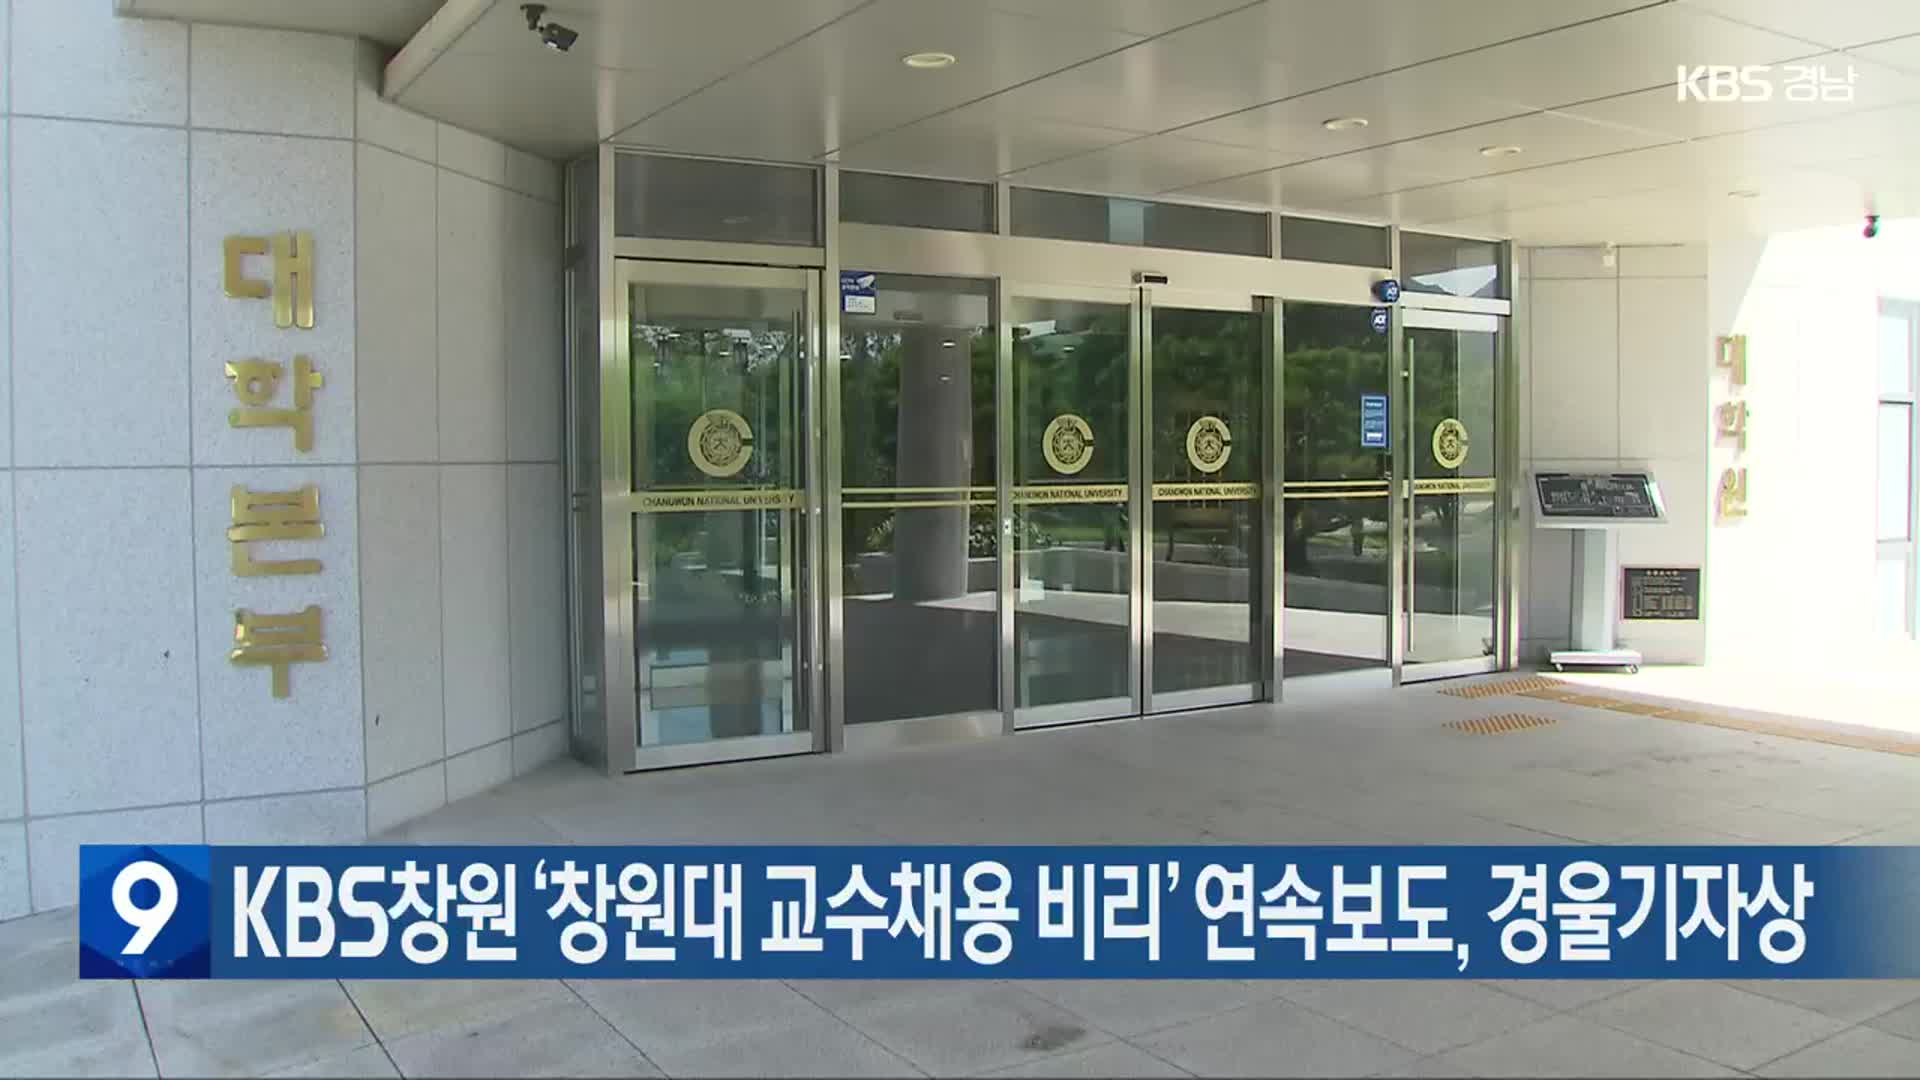 KBS창원 ‘창원대 교수채용 비리’ 연속보도, 경울기자상